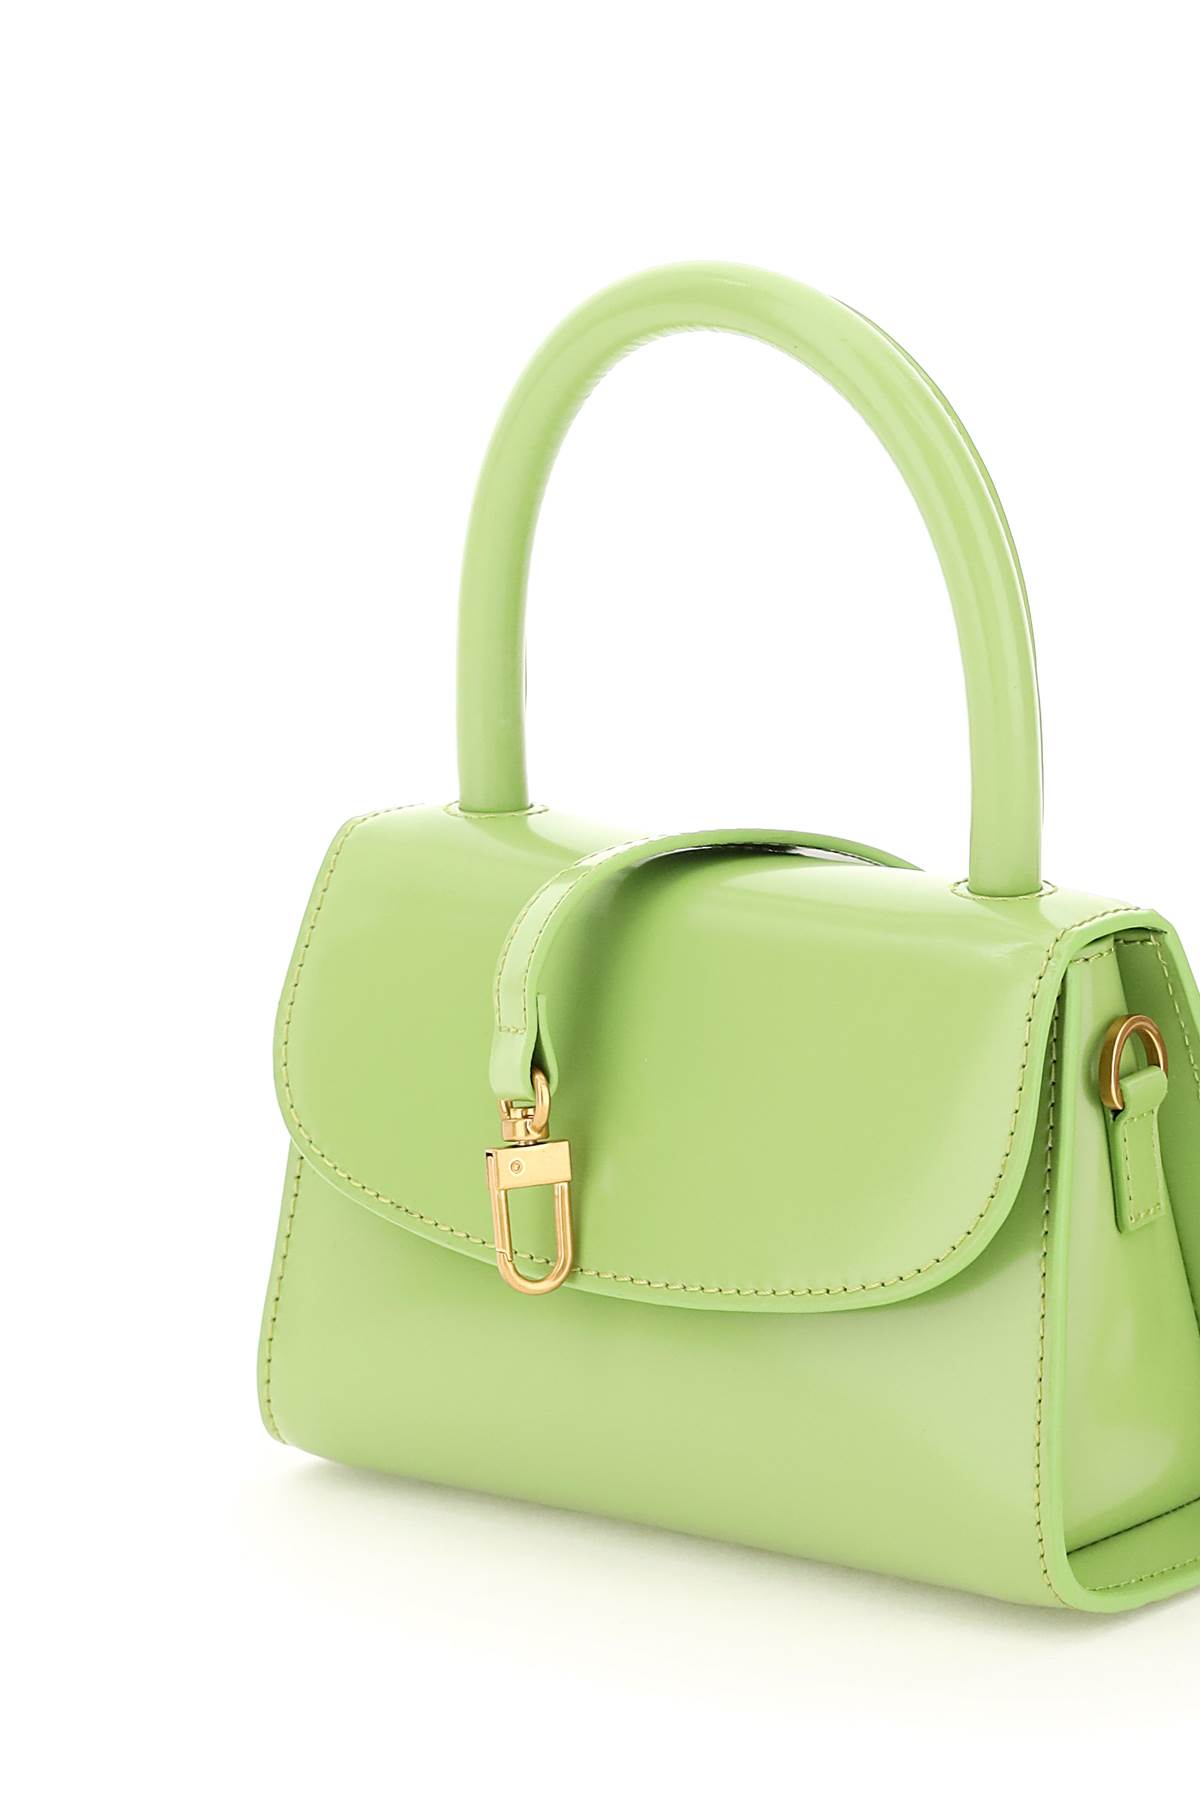 BY FAR Matilda Semi Patent Leather Bag-Green(Origin $505)